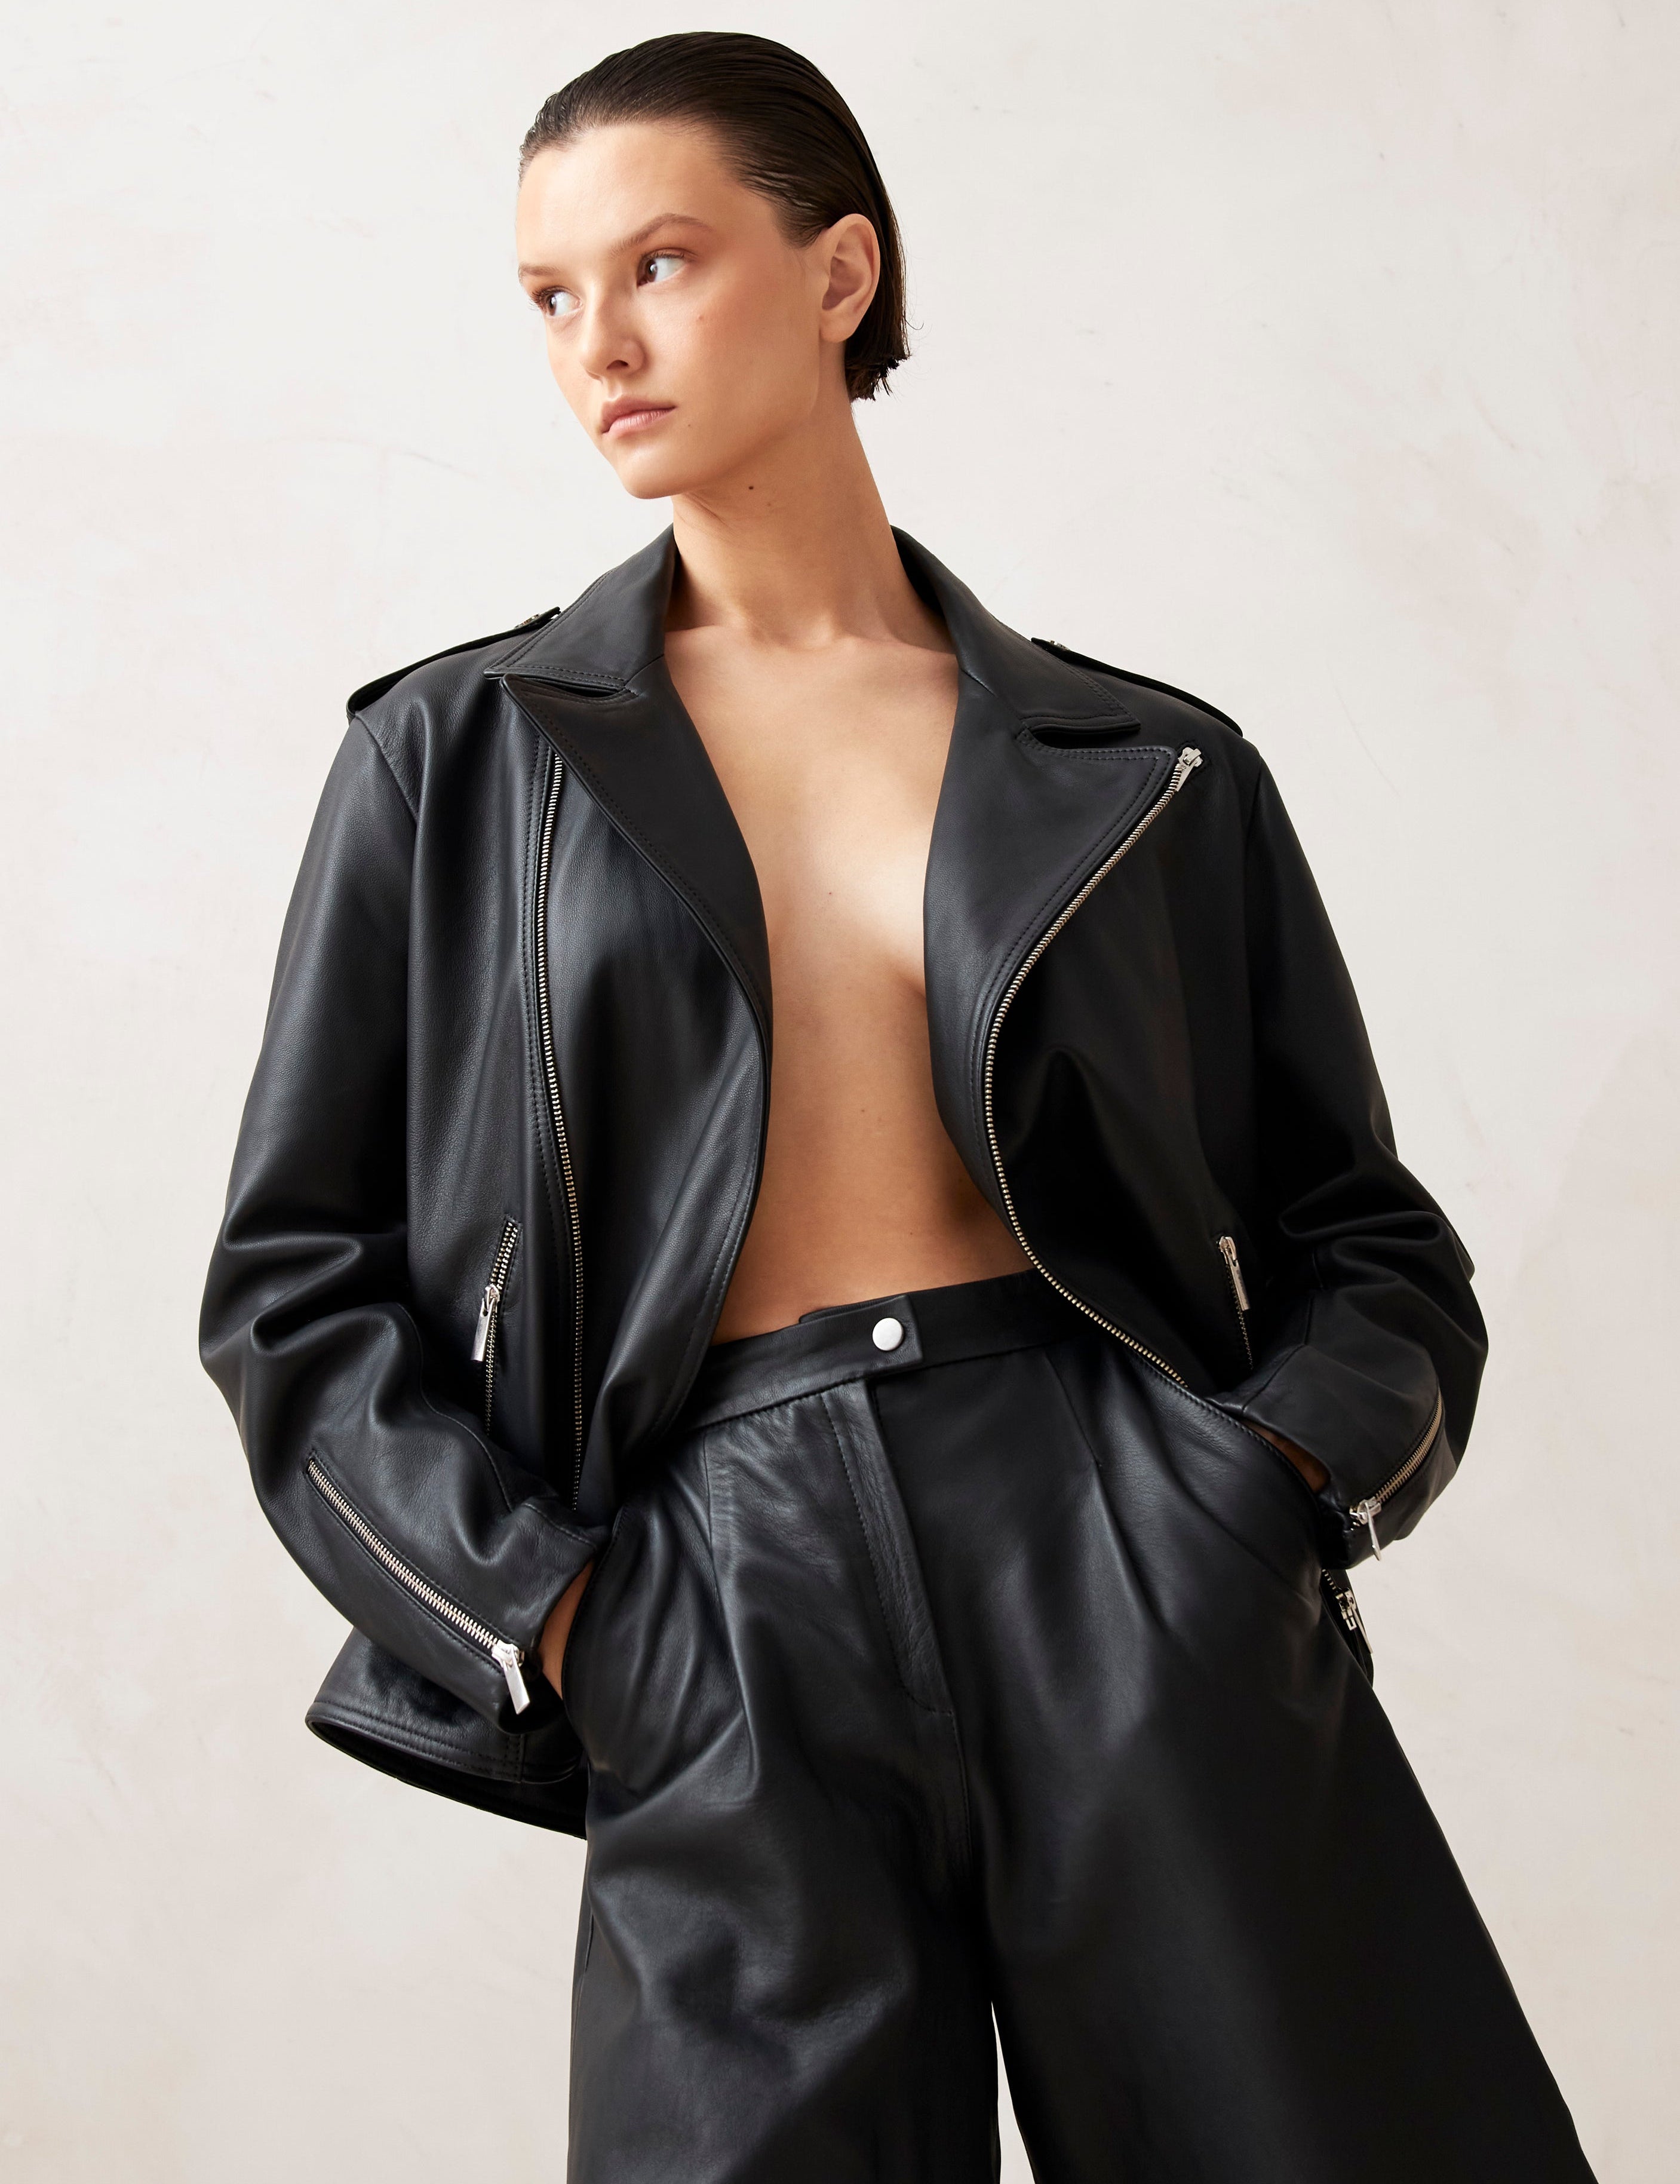 paris-black-leather-jacket-jackets-alohas-352478_3000x_660f3d8e-6d42-4870-950b-a2a29355b747.jpg